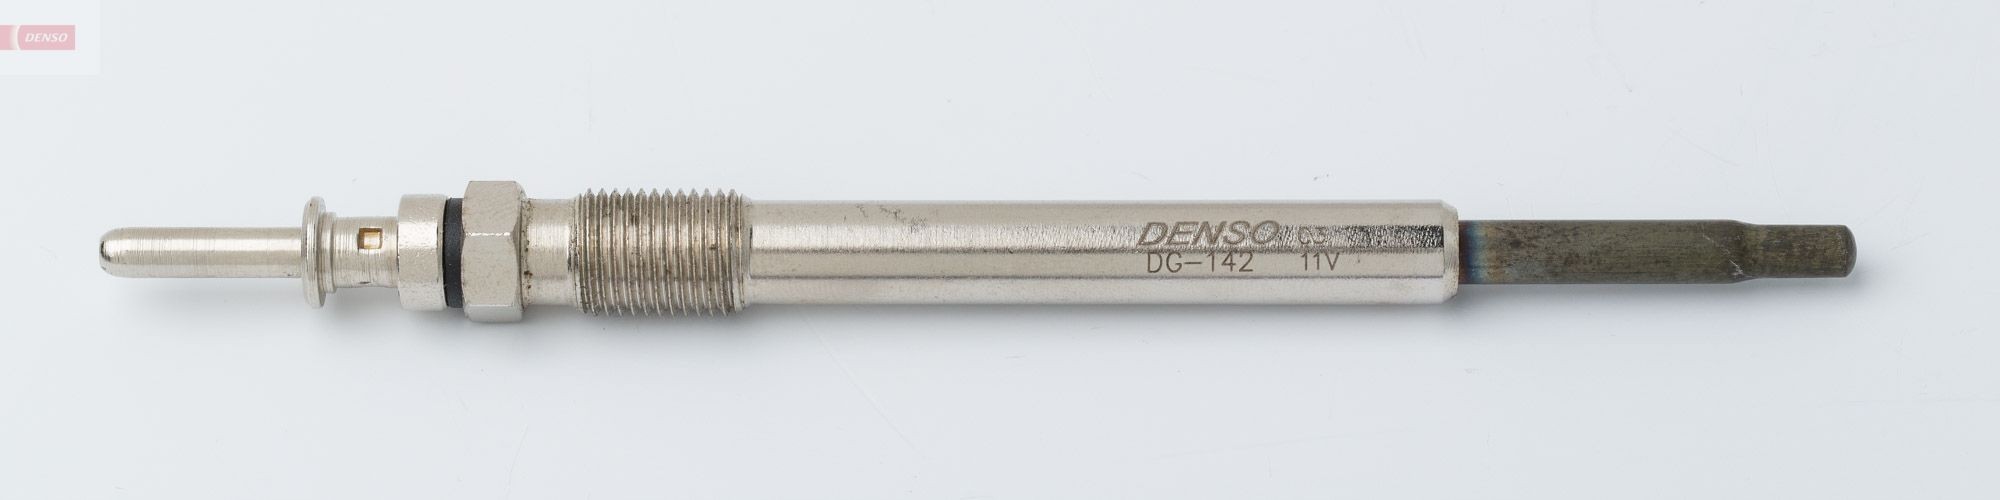 DENSO DG-142 Glow plug 1214 033